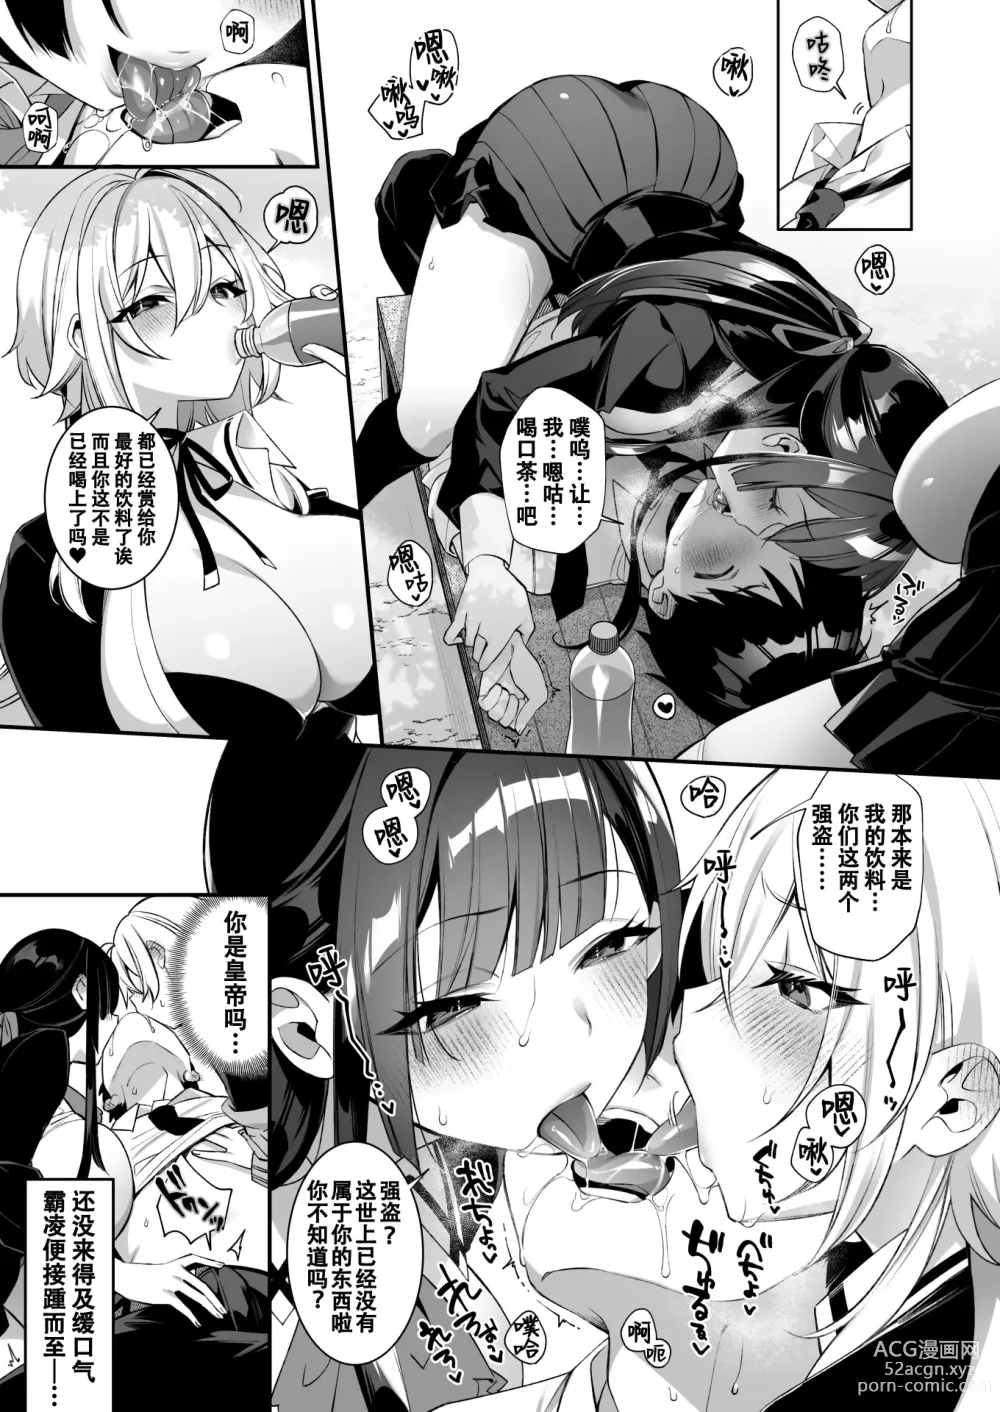 Page 24 of manga Hypnosis 3 (uncensored)